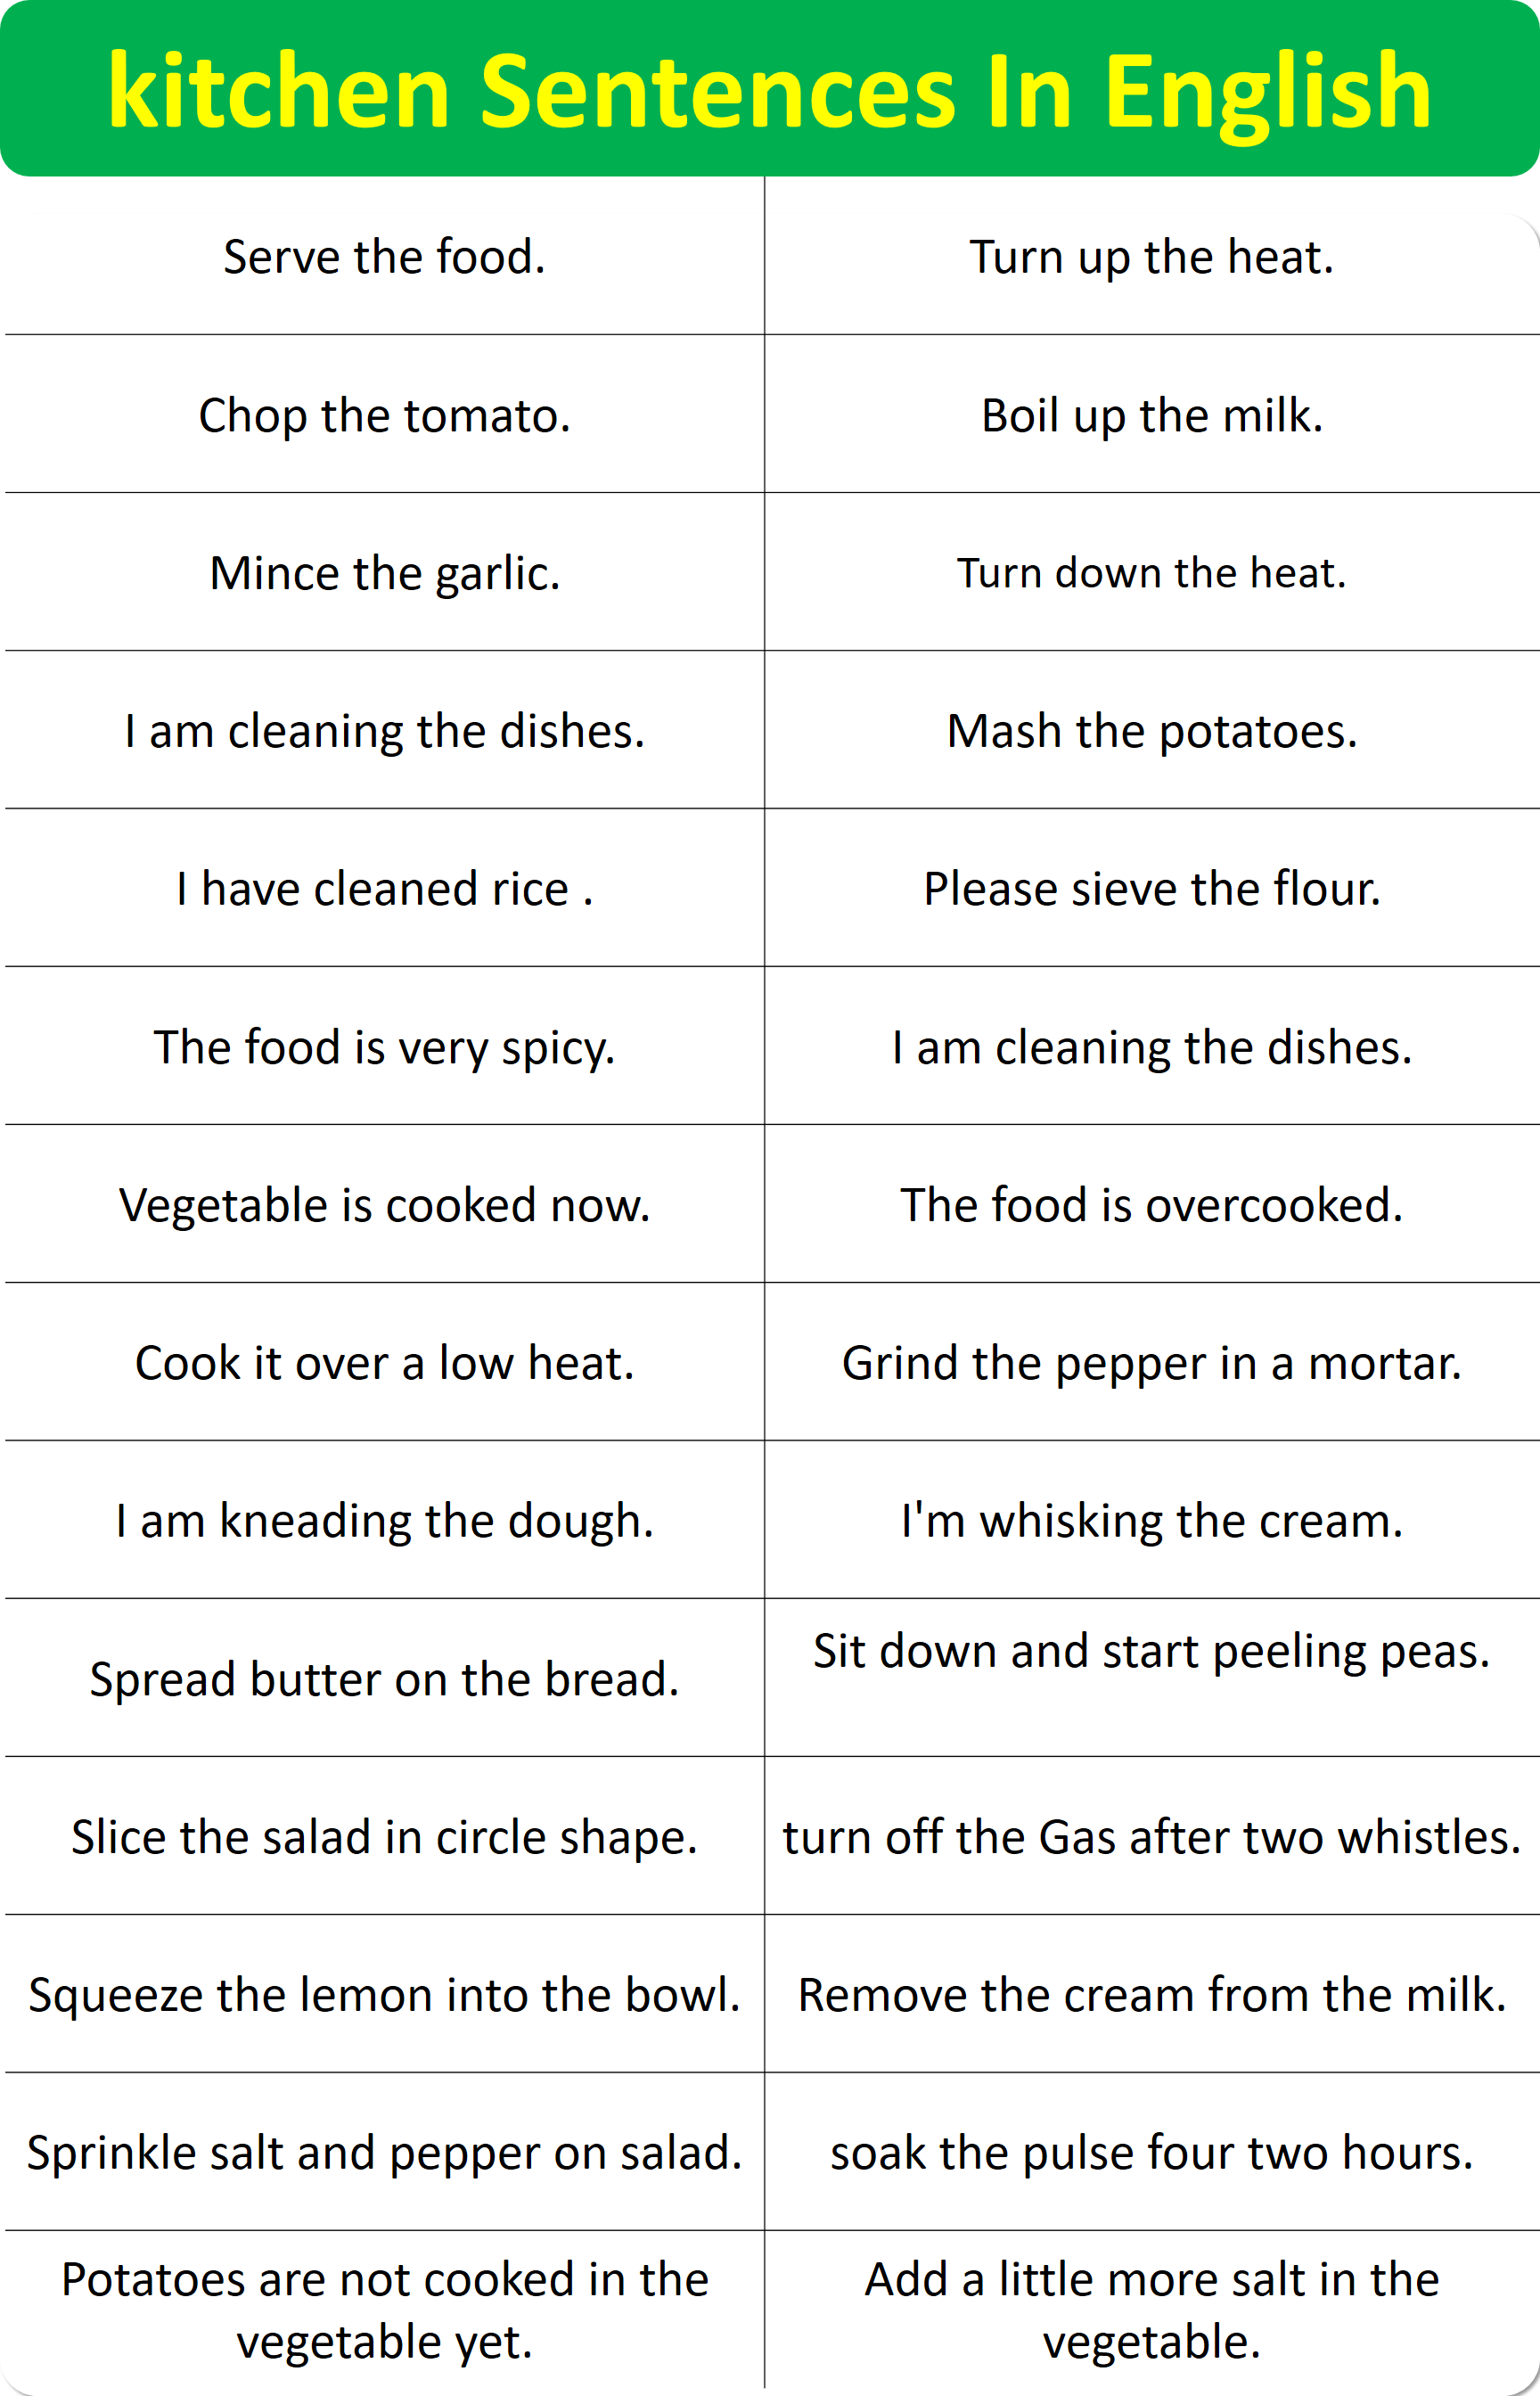 kitchen Sentences In English. speak English in Kitchen